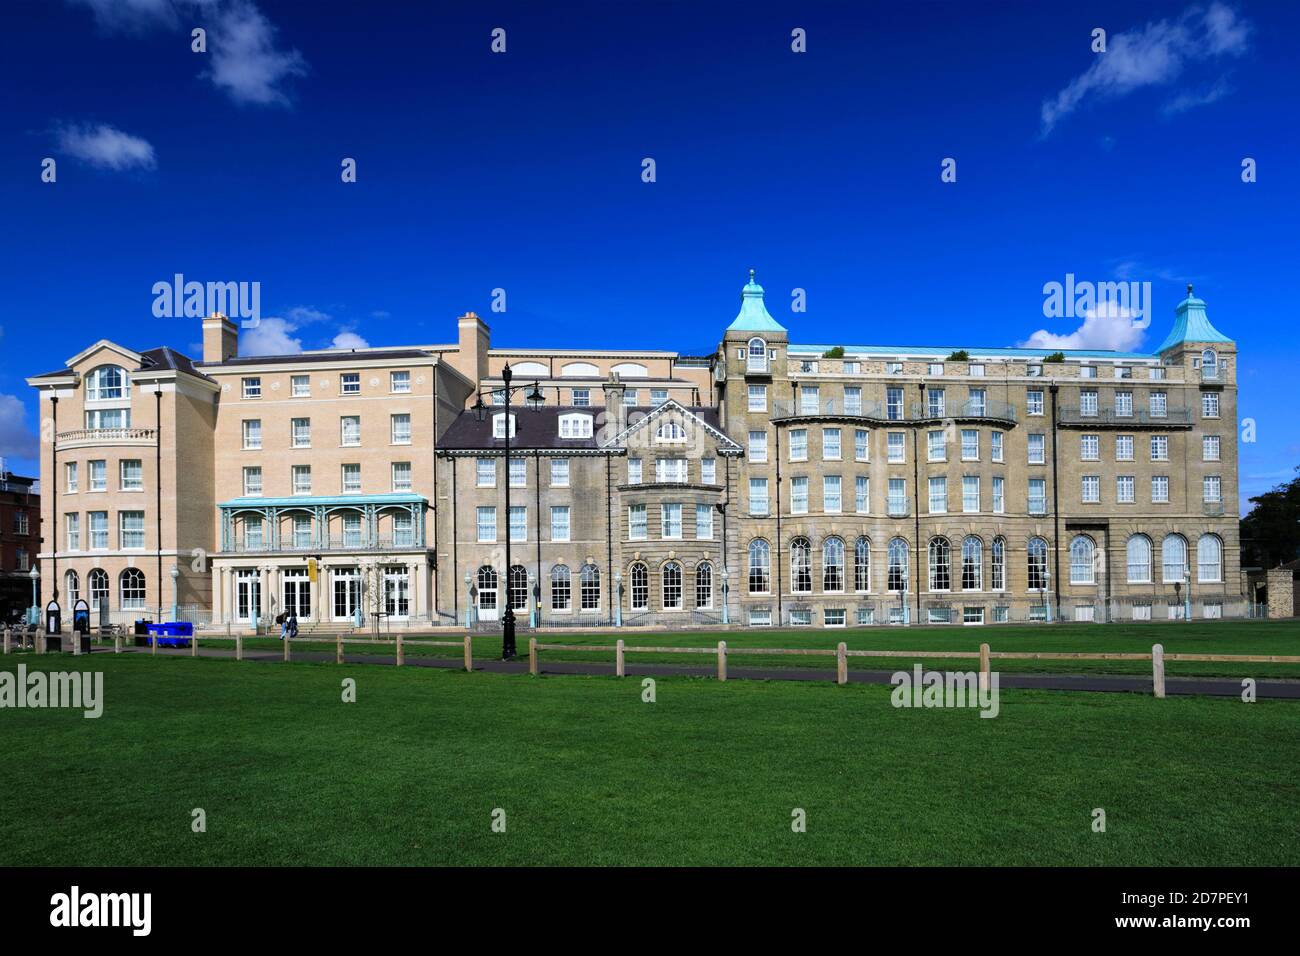 The University Arms Hotel, Parkers Piece, Cambridge City, Cambridgeshire, England, UK Stock Photo